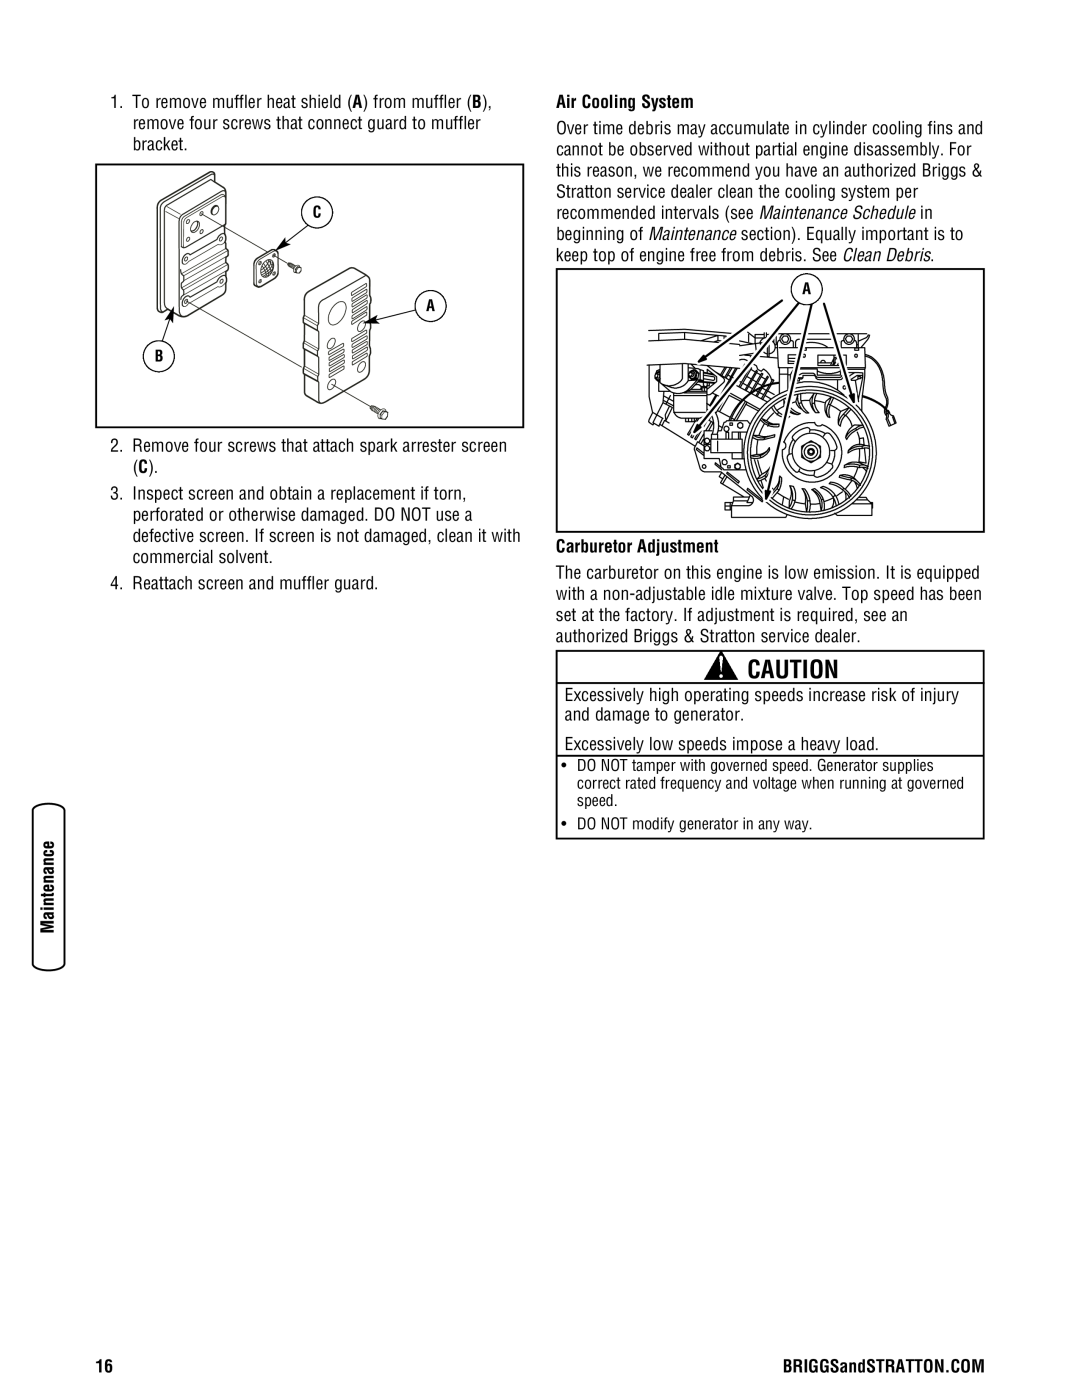 Briggs & Stratton 030248-0 manual Air Cooling System, Carburetor Adjustment 